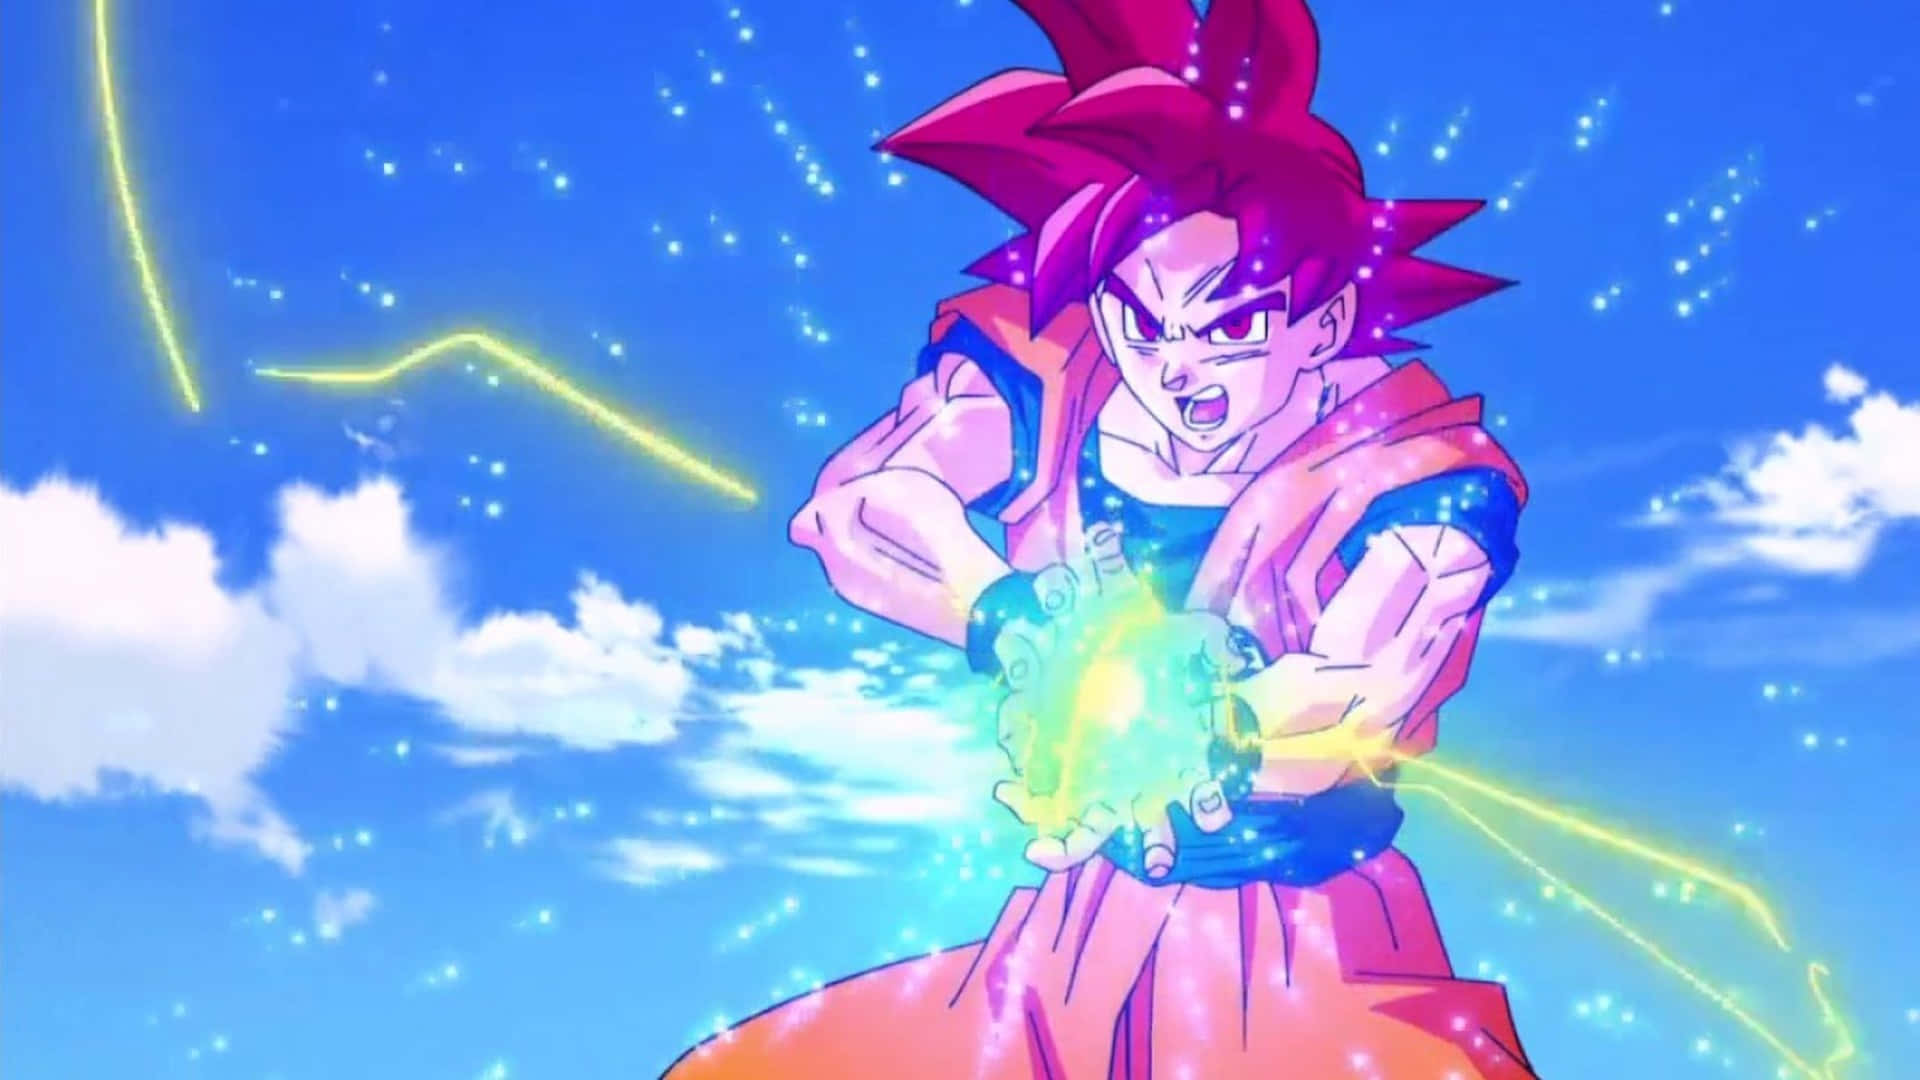 Dragonball Z Super Saiyan Goku Exibindo Seus Poderes No Céu. Papel de Parede